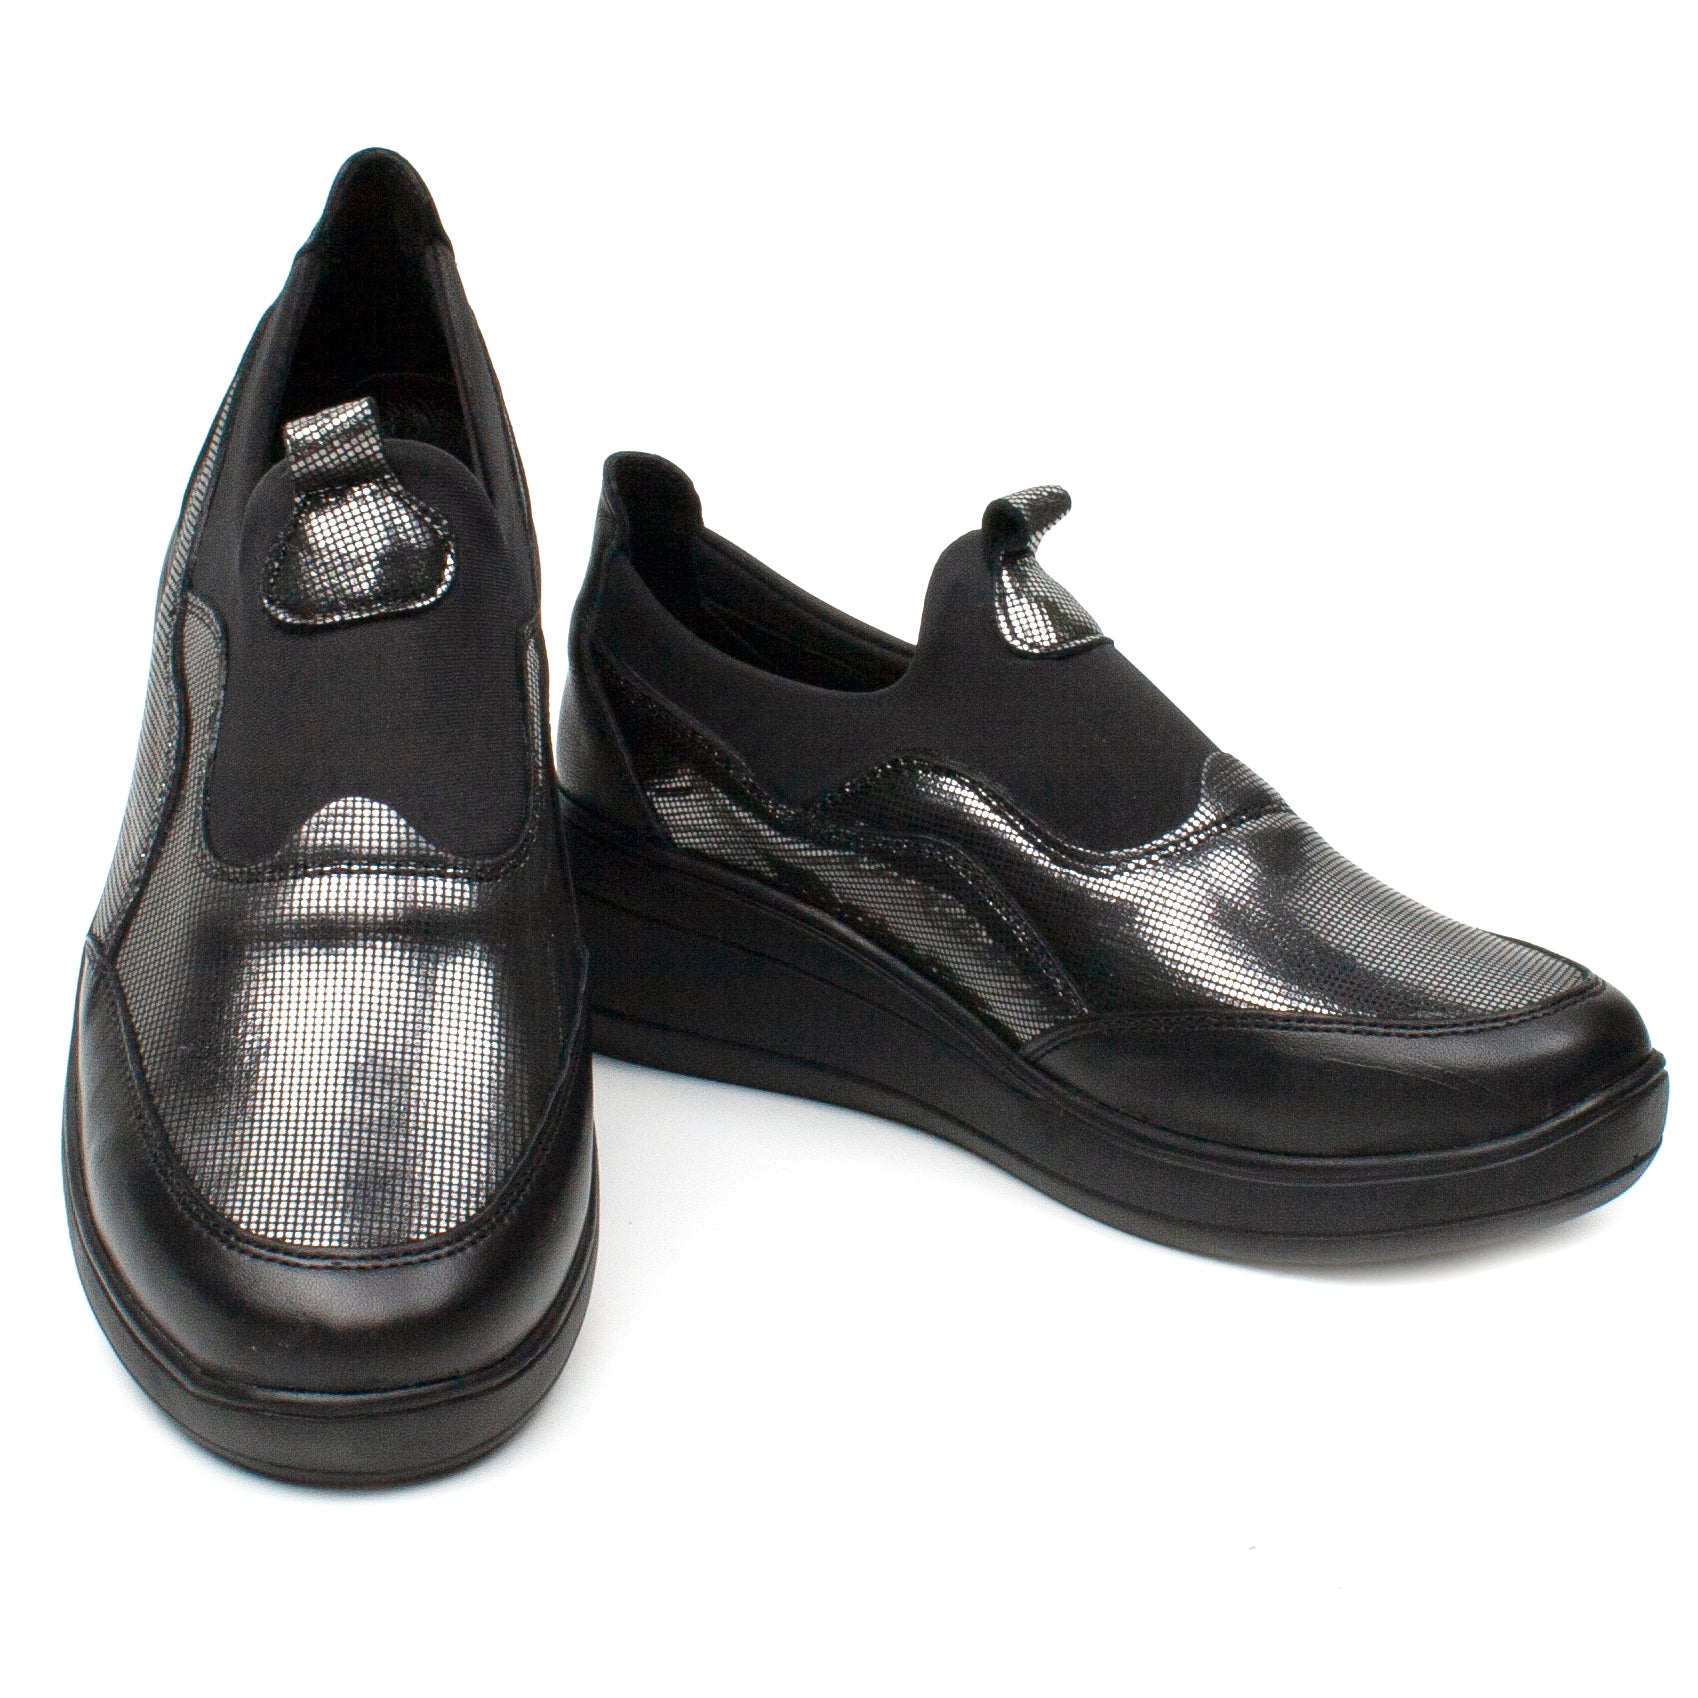 Caspian Pantofi dama 3013 negru ID1748-NG